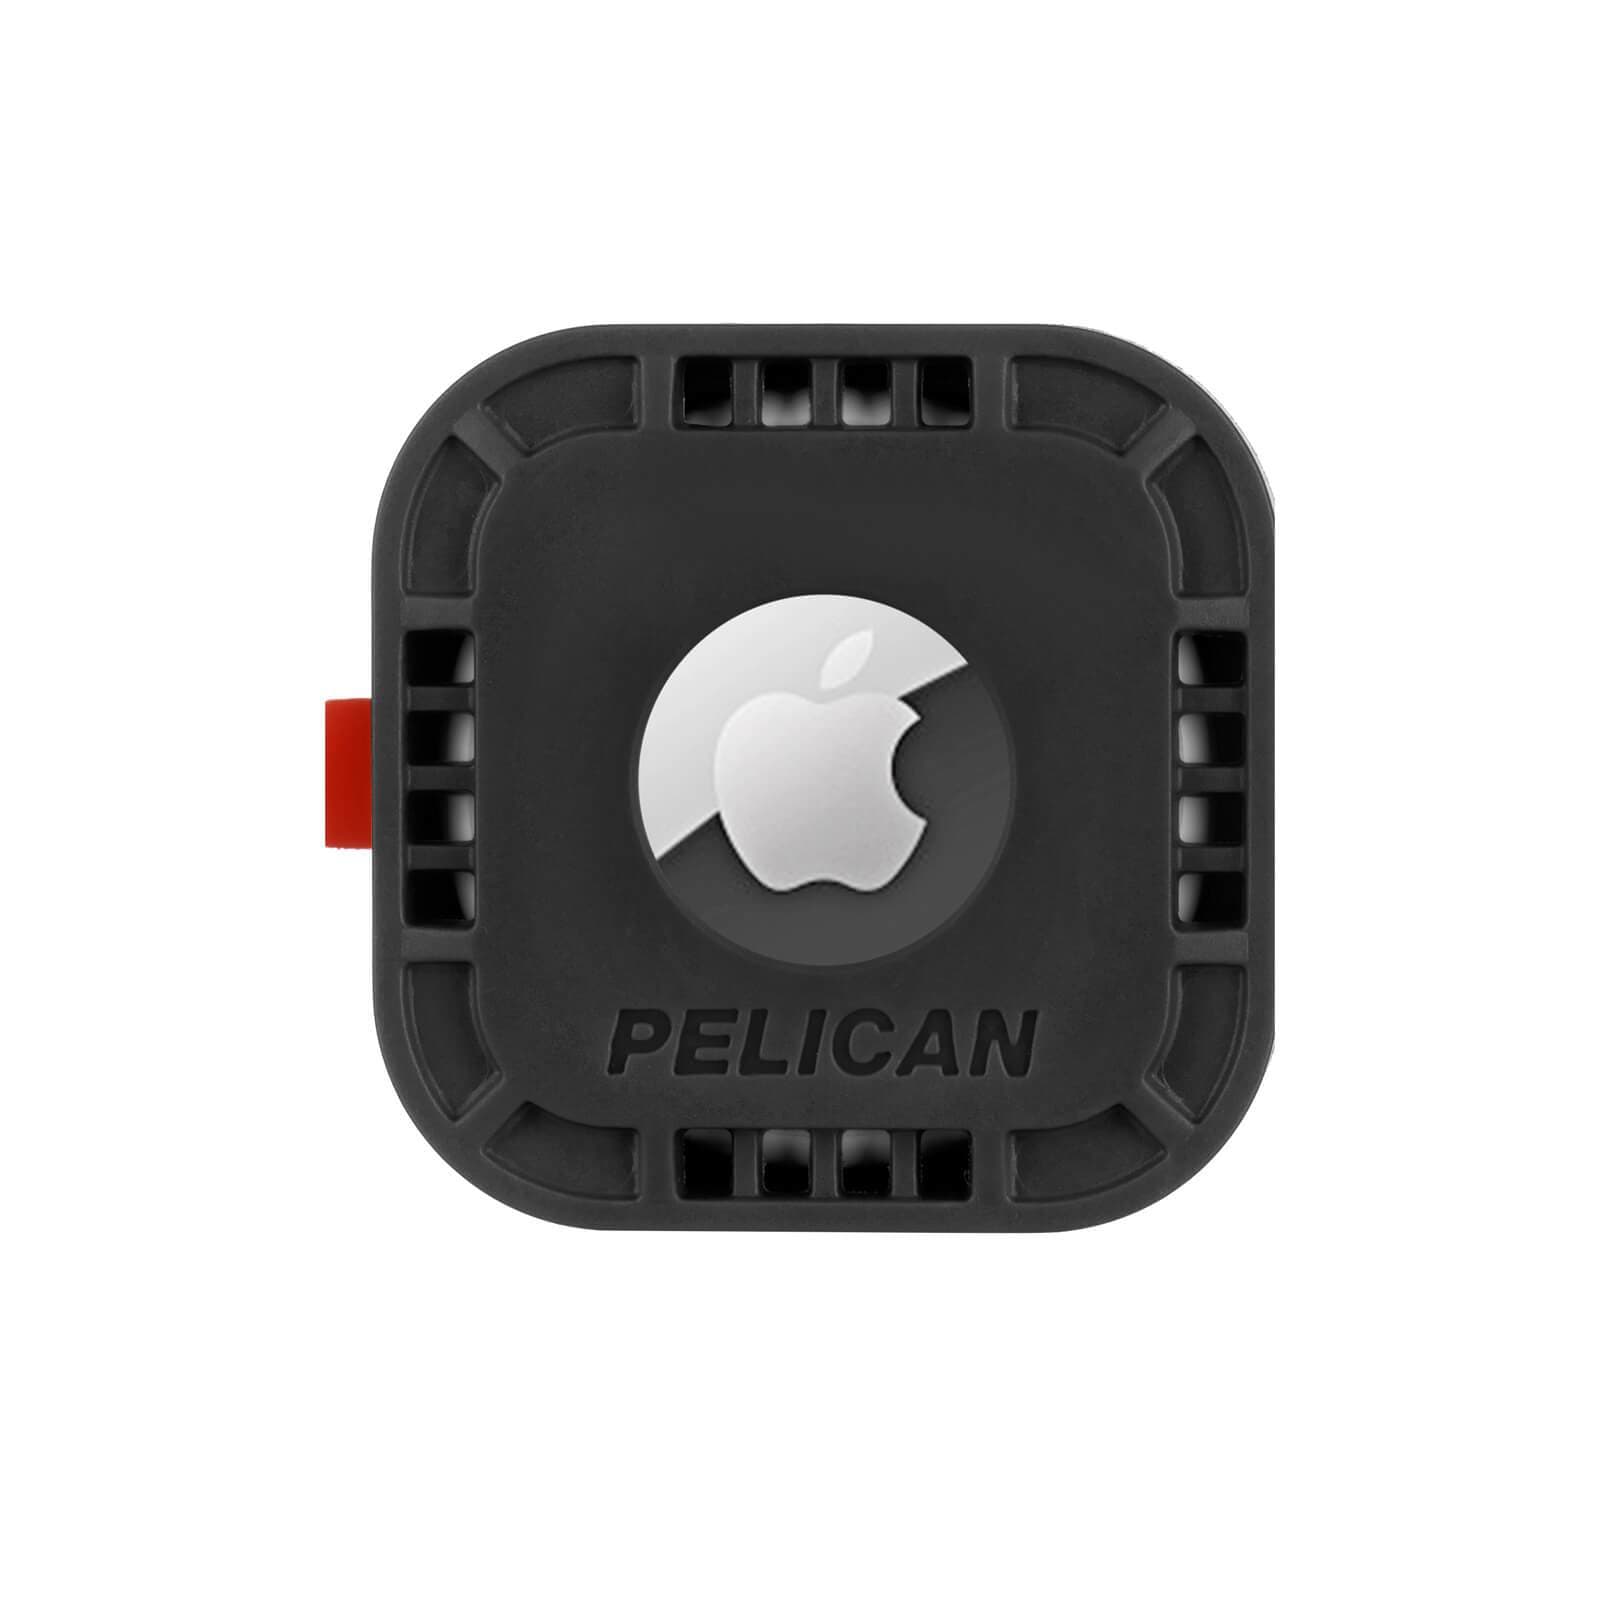 Pelican Protector AirTag Sticker Mount (Black) - AirTag Case